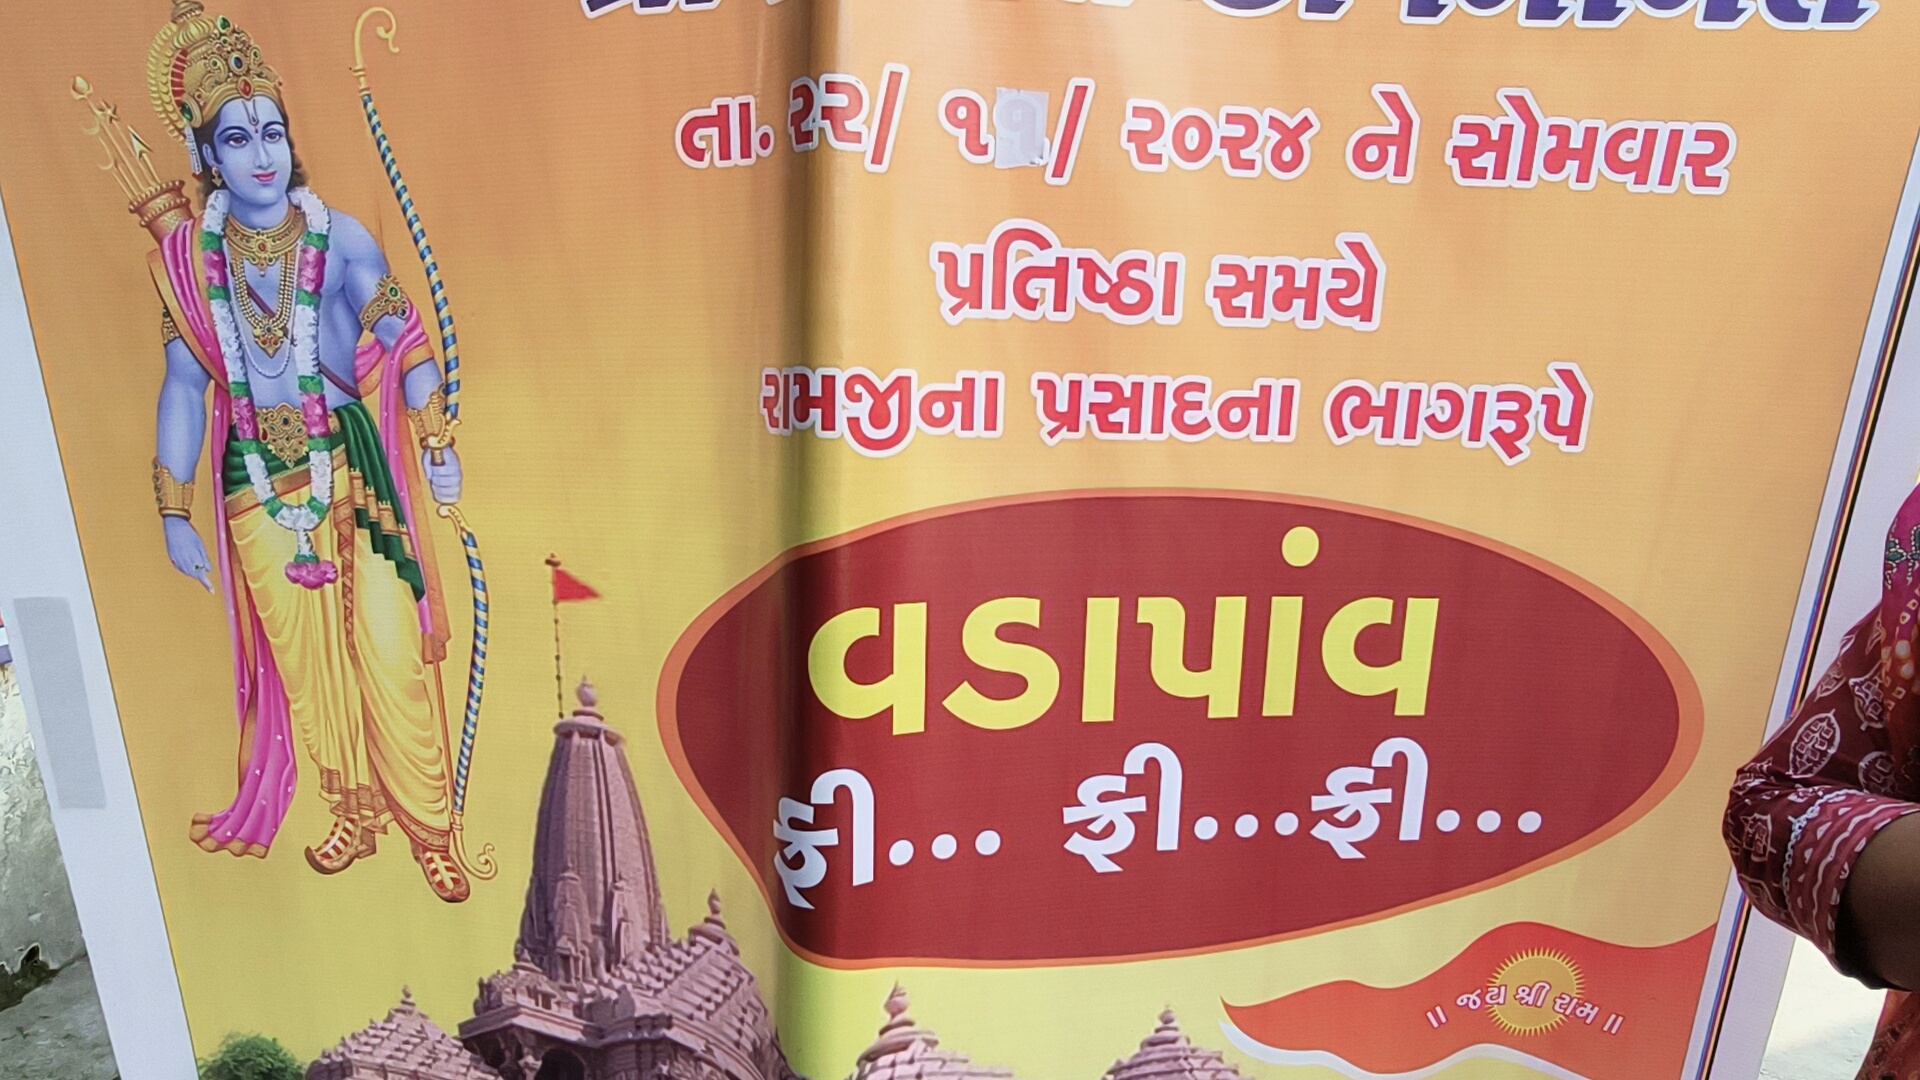 Navsari traders have taken a unique initiative for Ram devotees